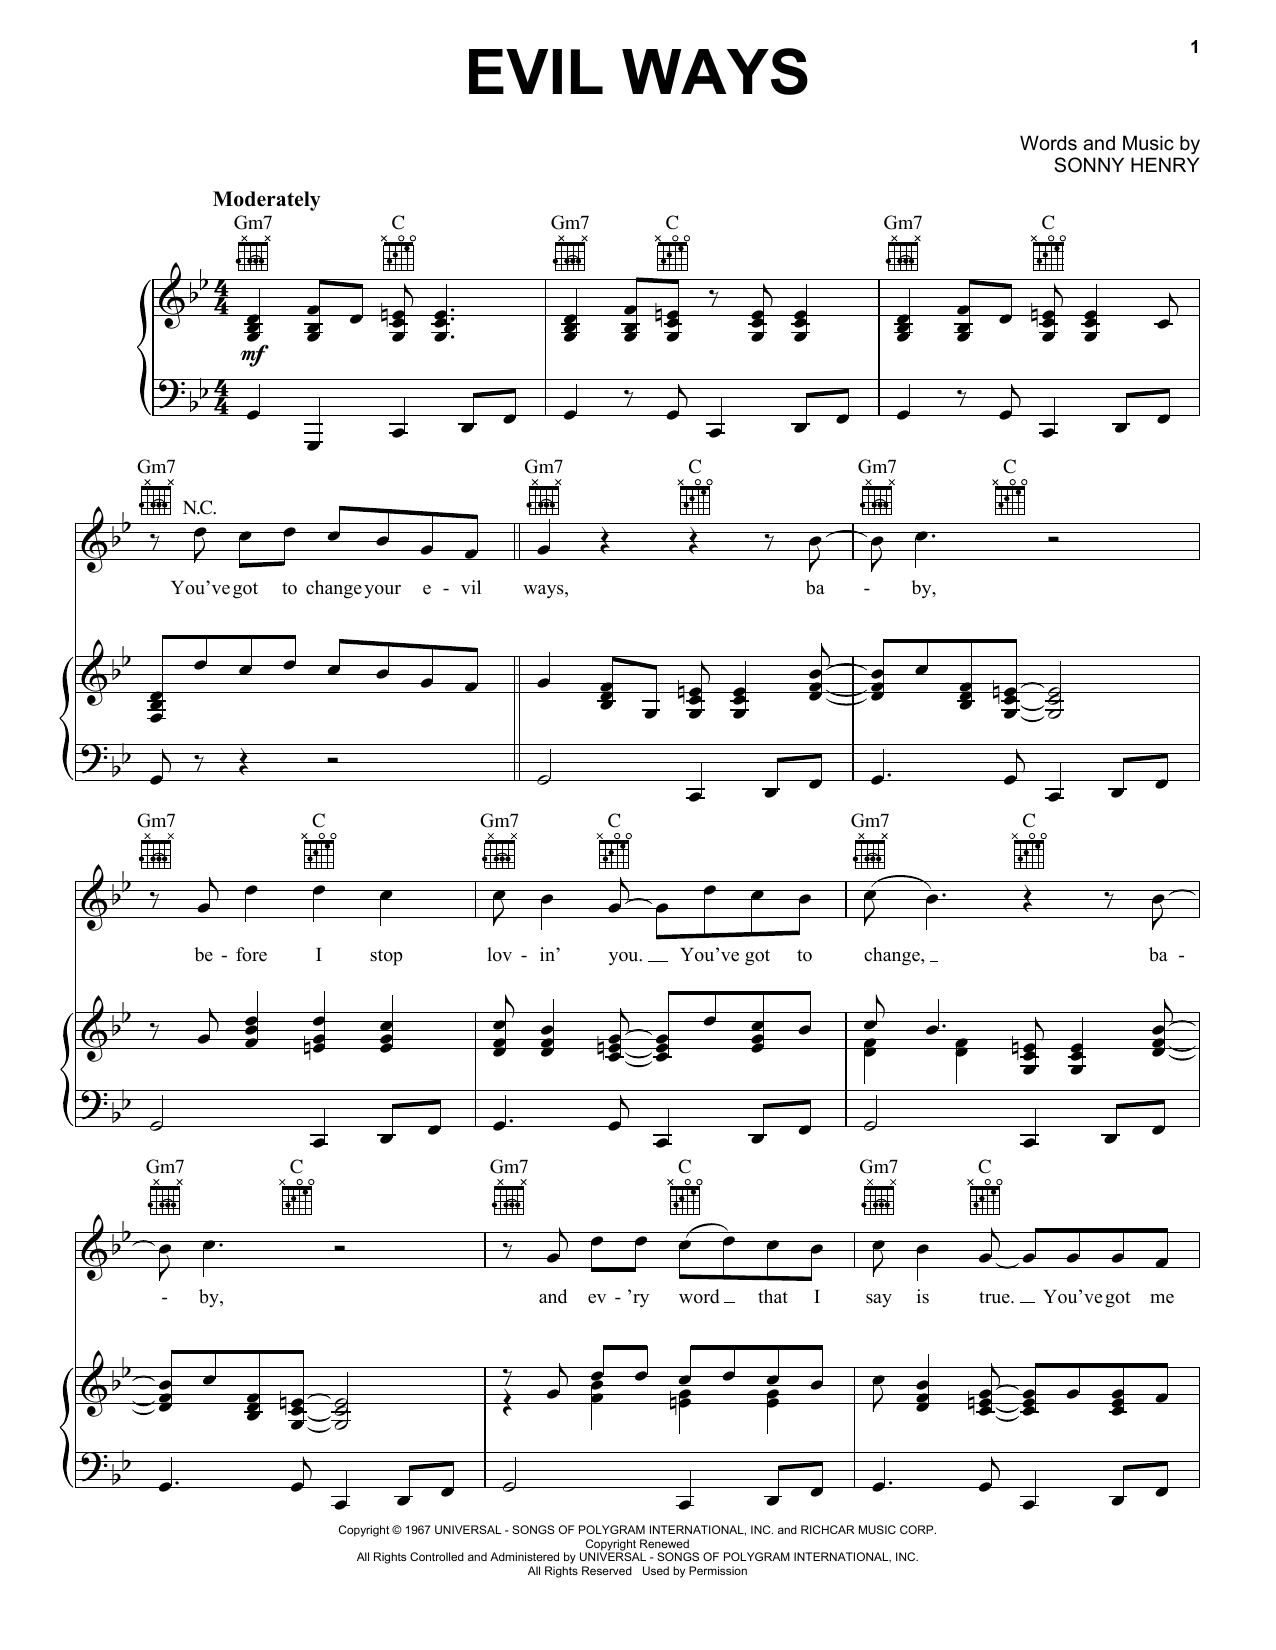 Santana Evil Ways Sheet Music Notes & Chords for Guitar Tab (Single Guitar) - Download or Print PDF